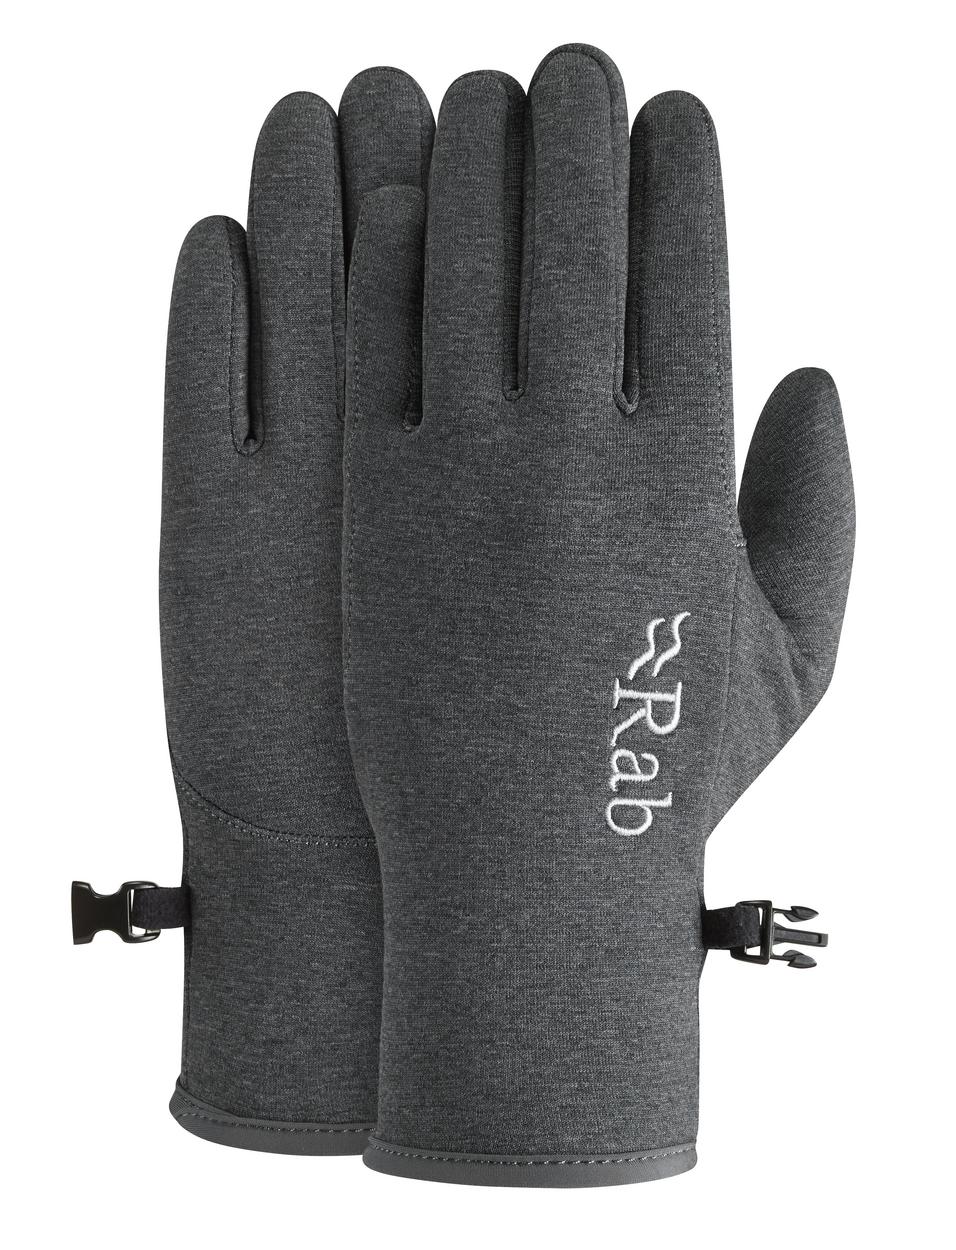 Geon Gloves, black/steel marl